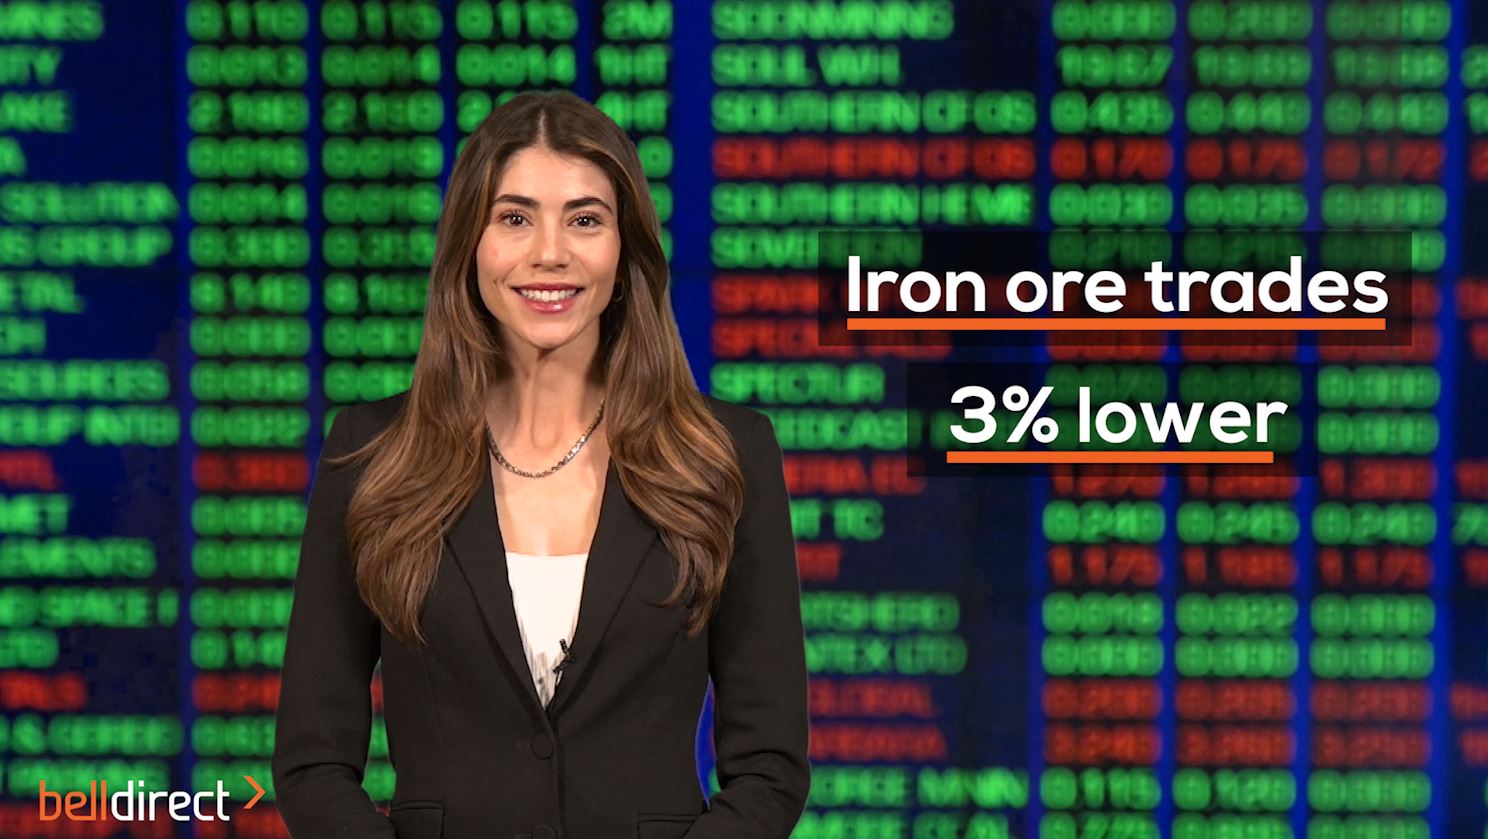 Iron ore trades 3% lower